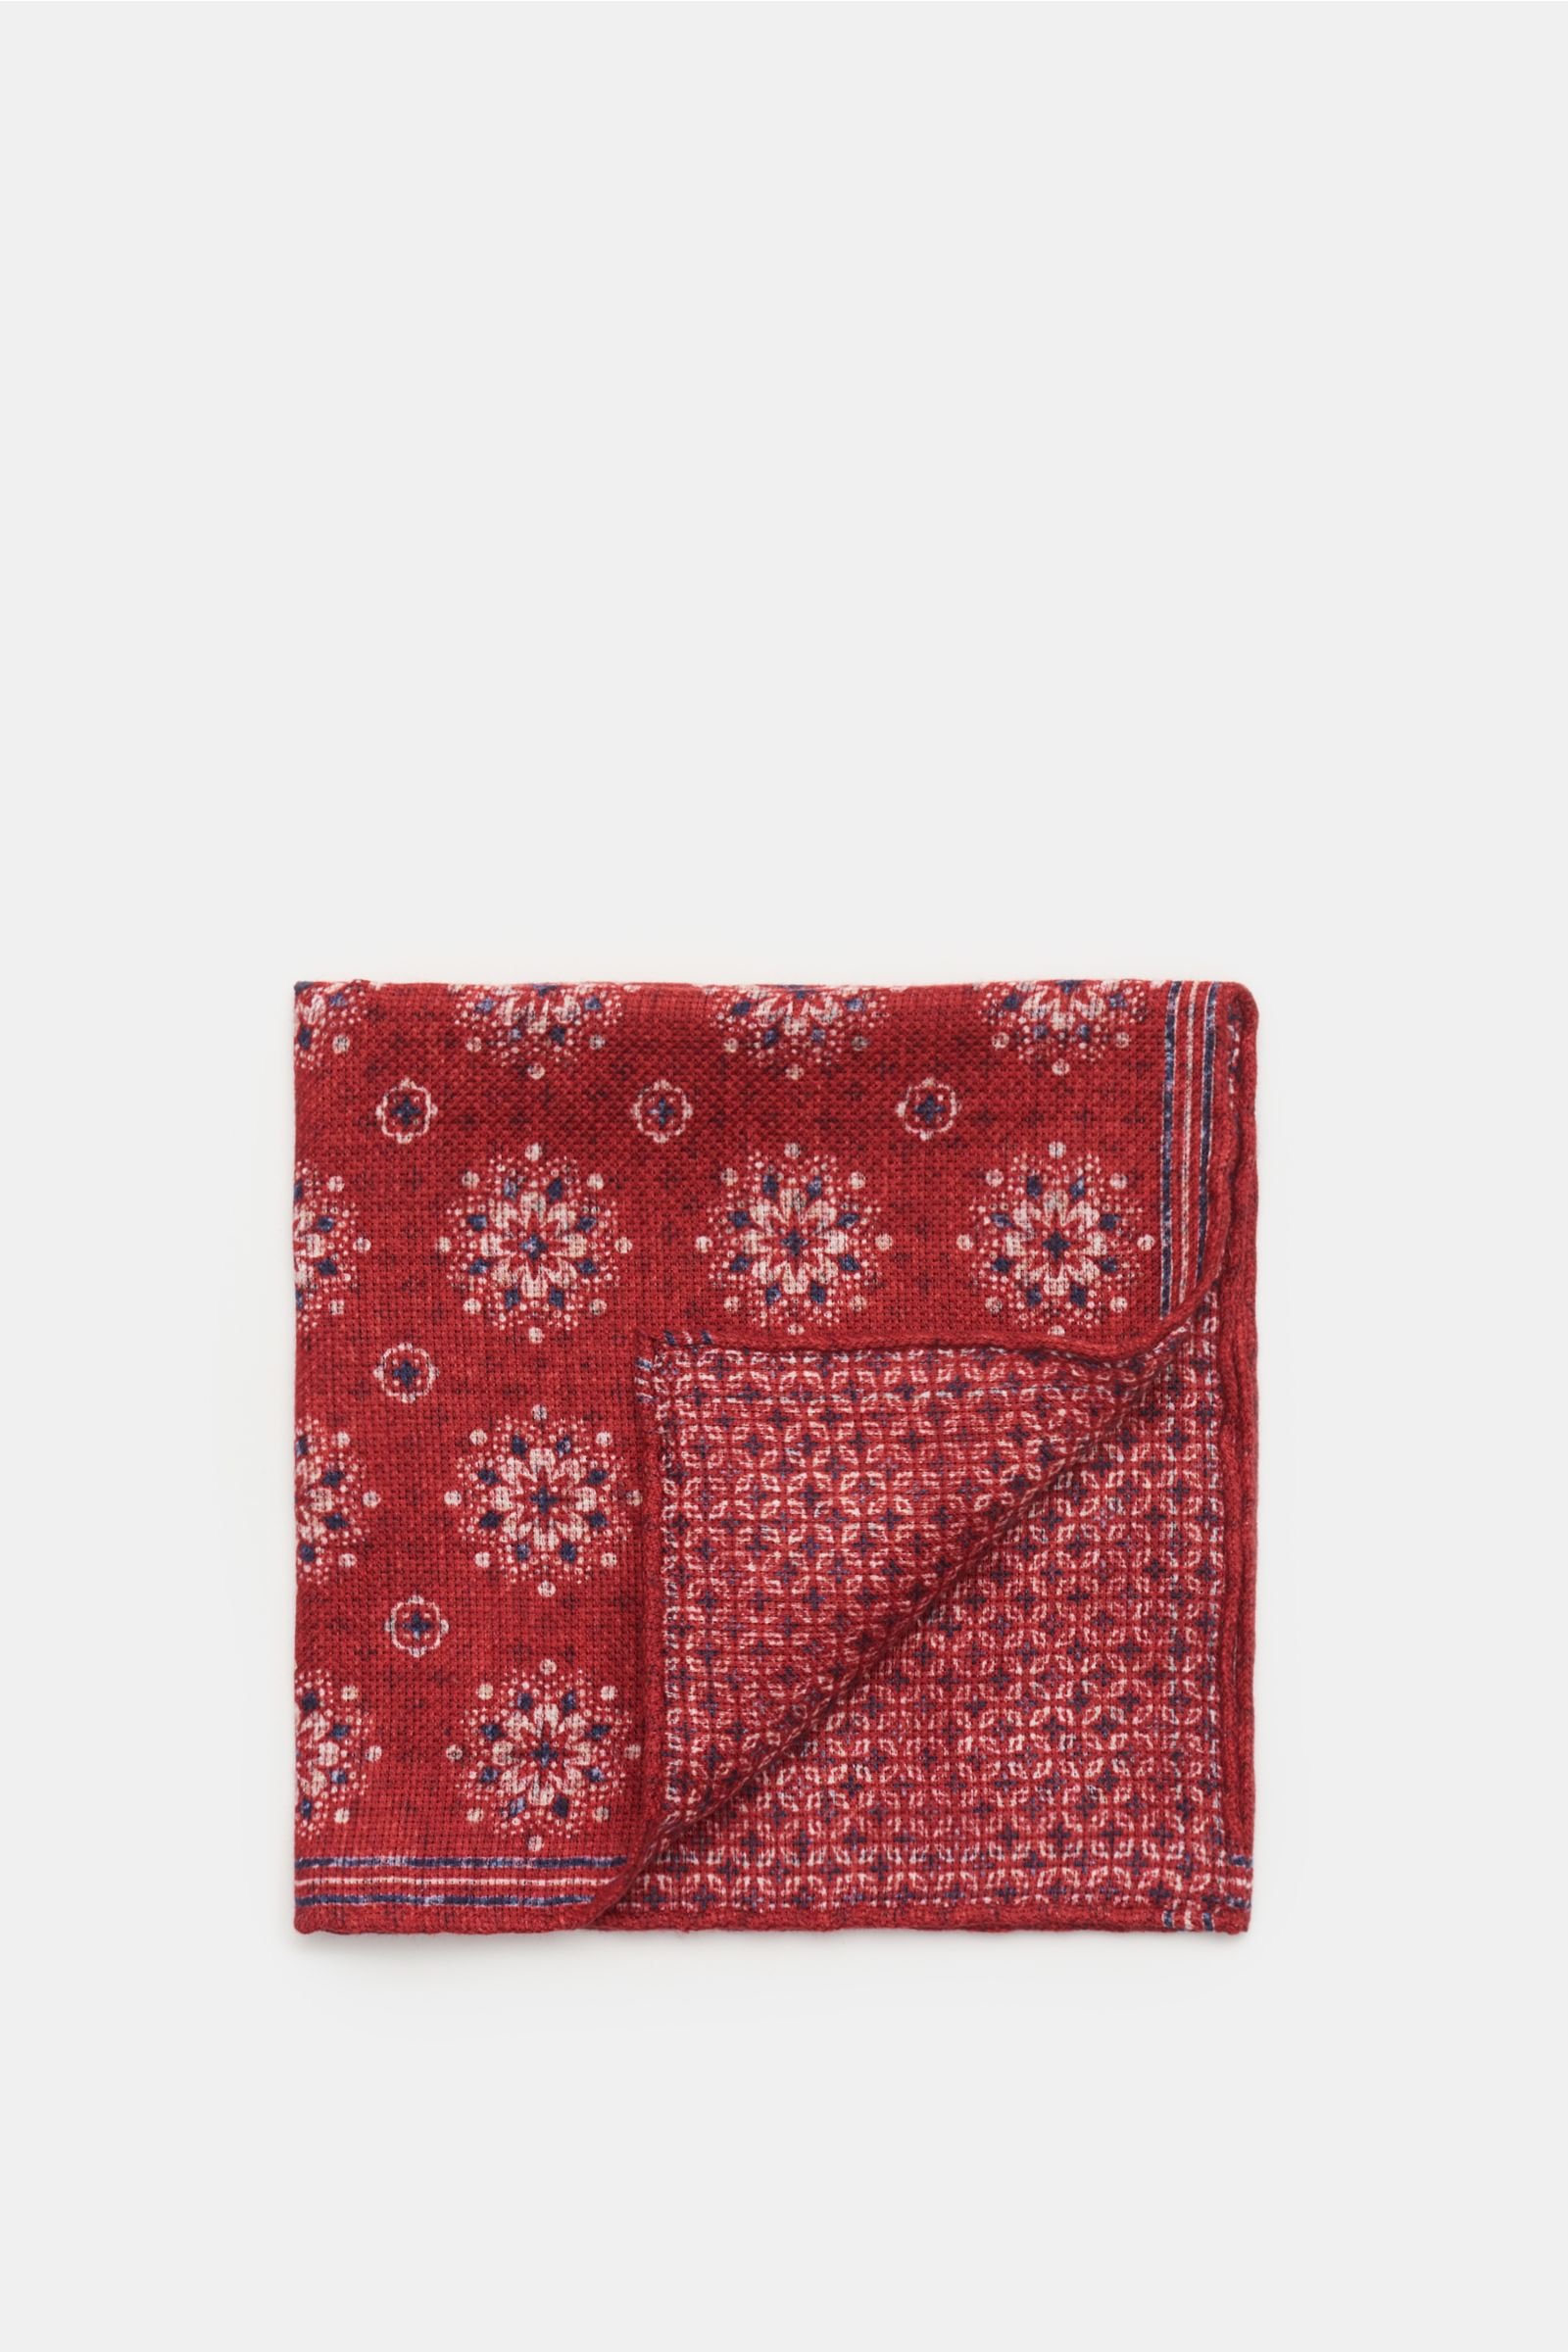 Pocket square red/navy patterned